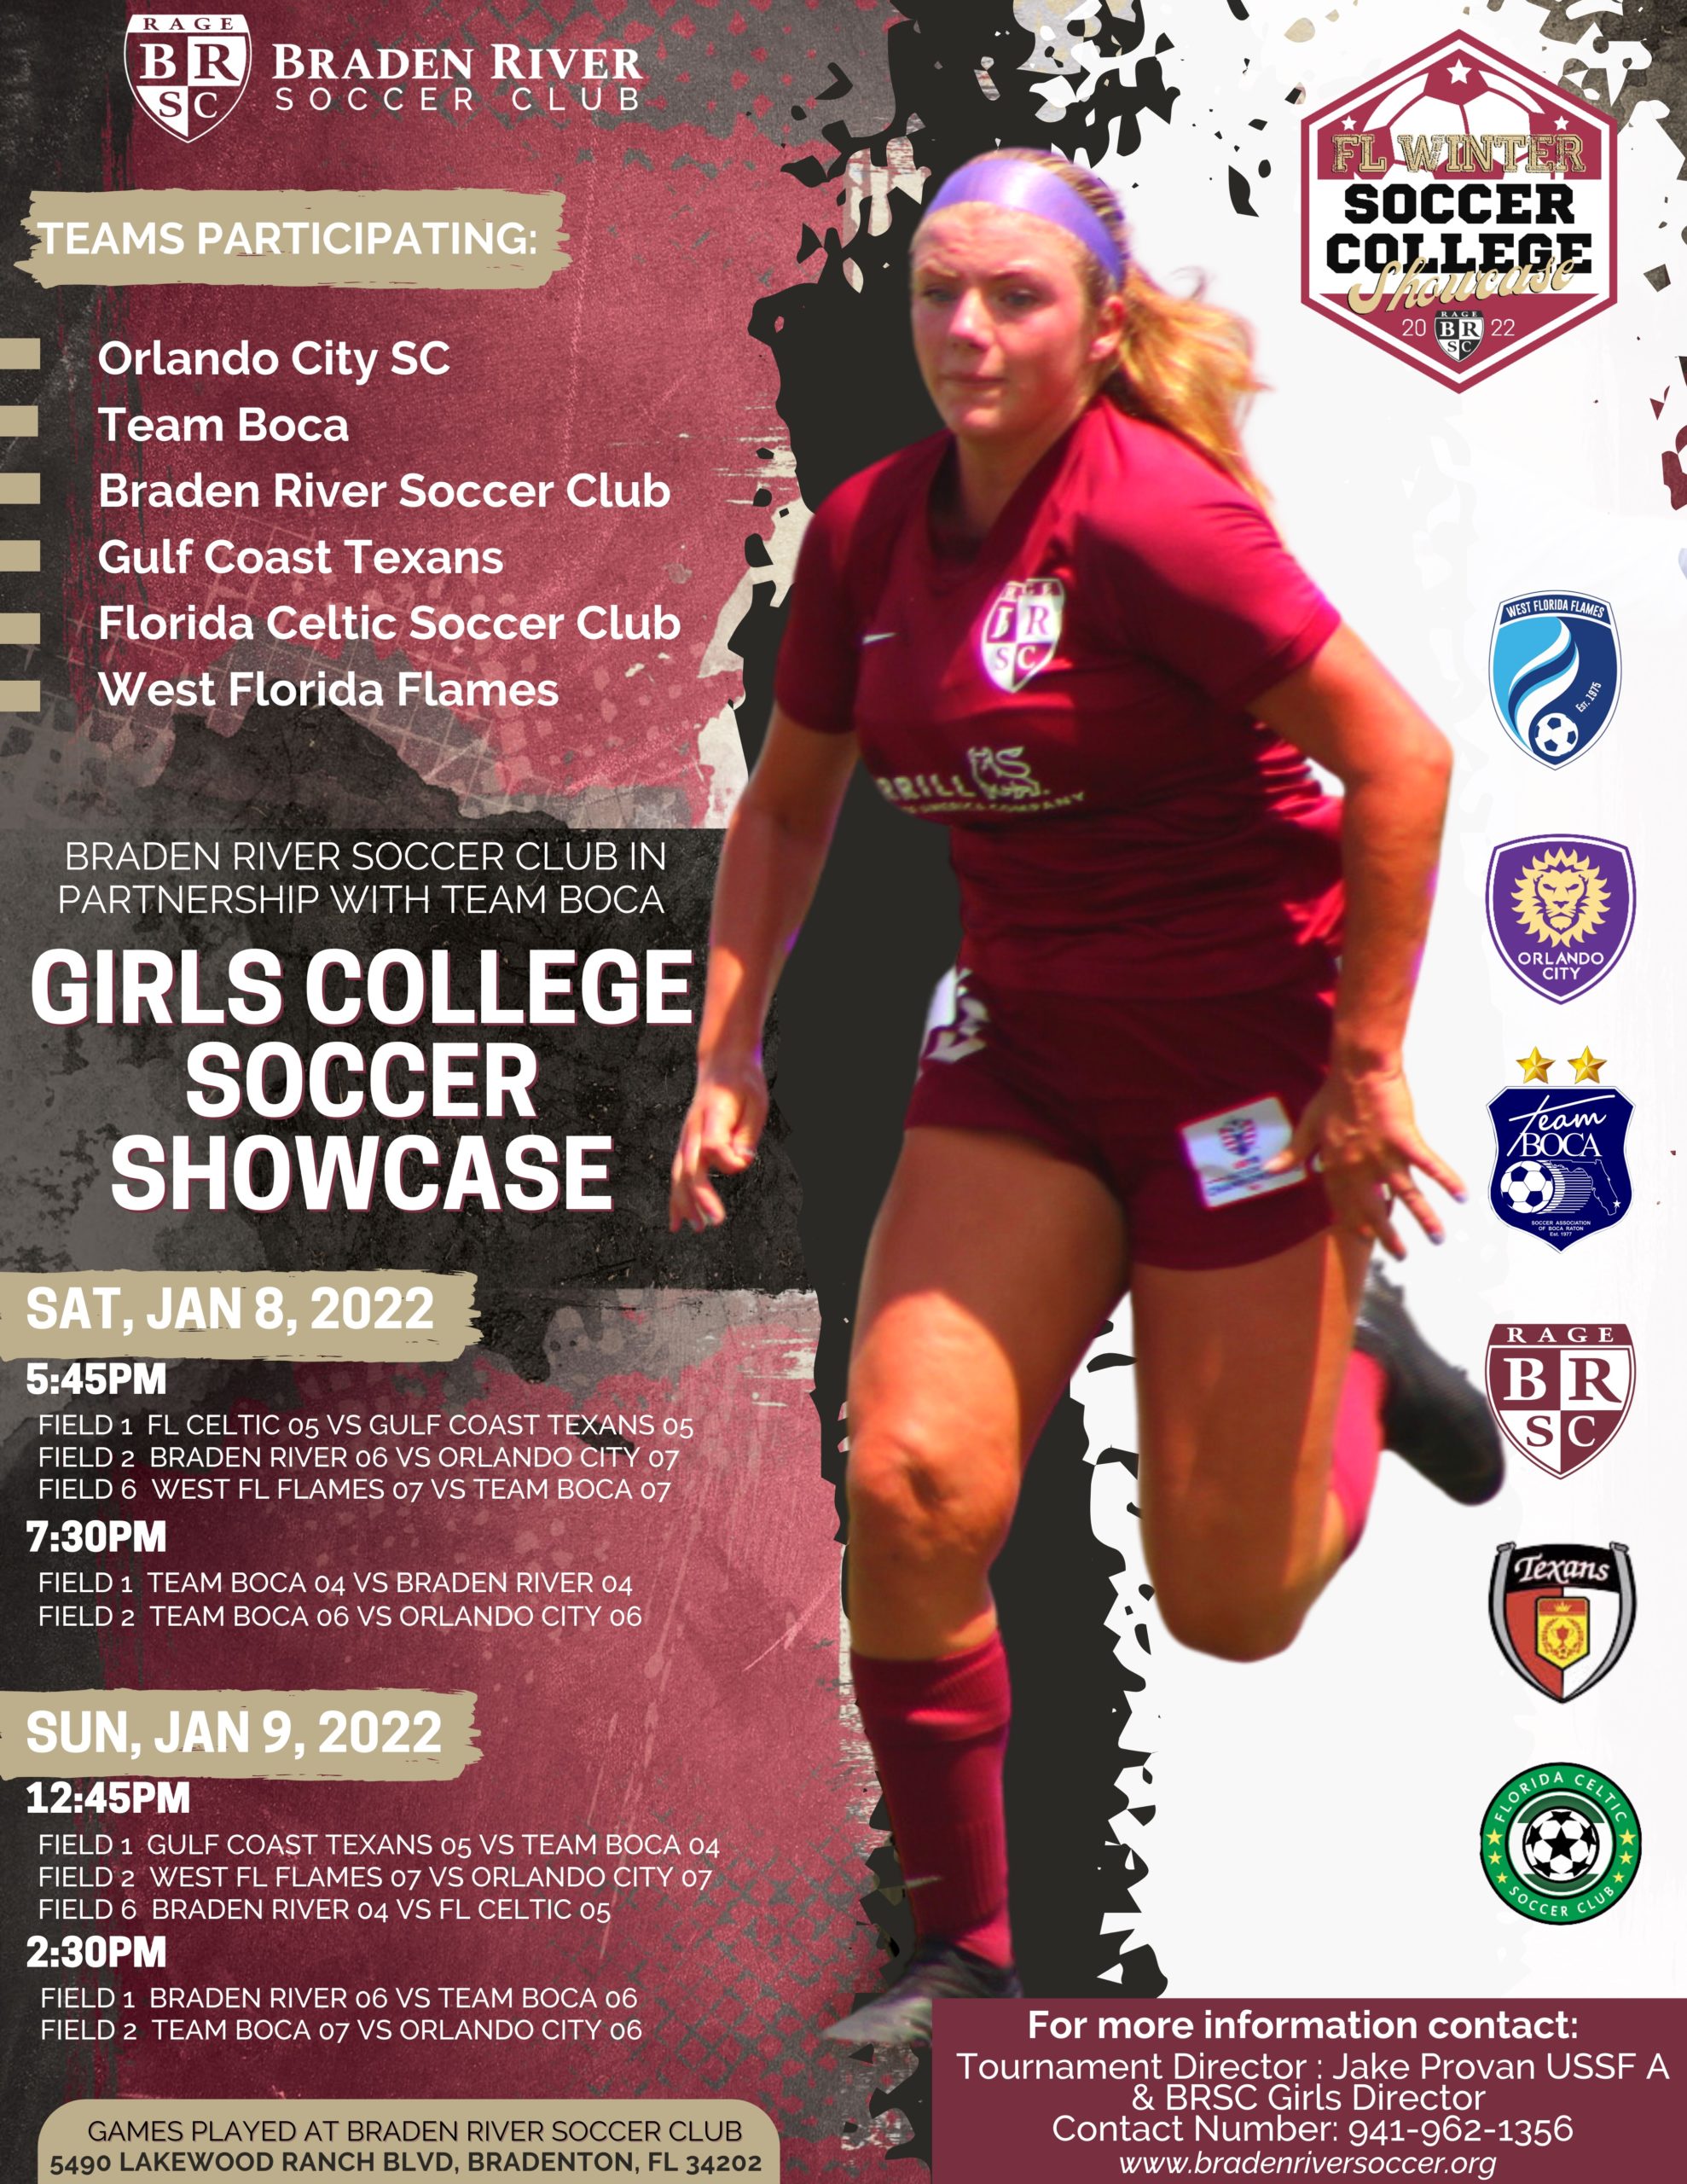 Girls college soccer showcase